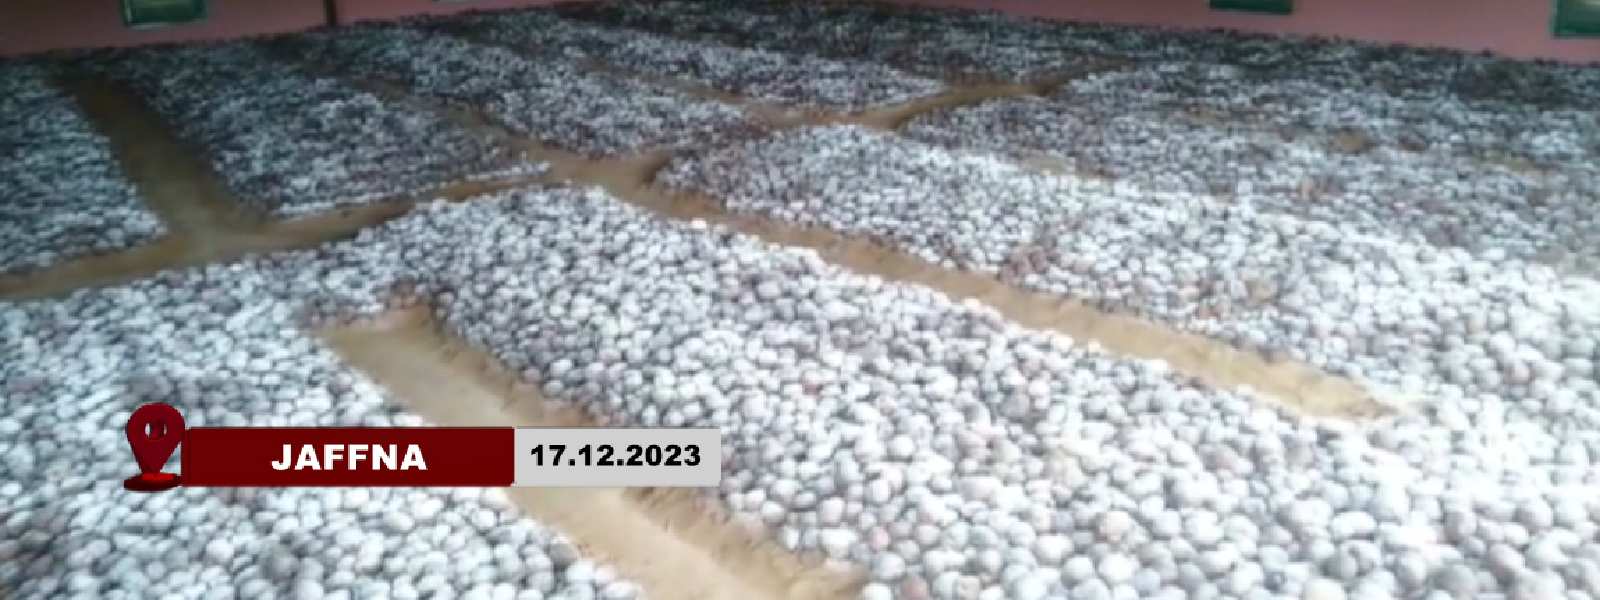 Aussie Seed Potatoes Ruined, Ministry Orders Probe